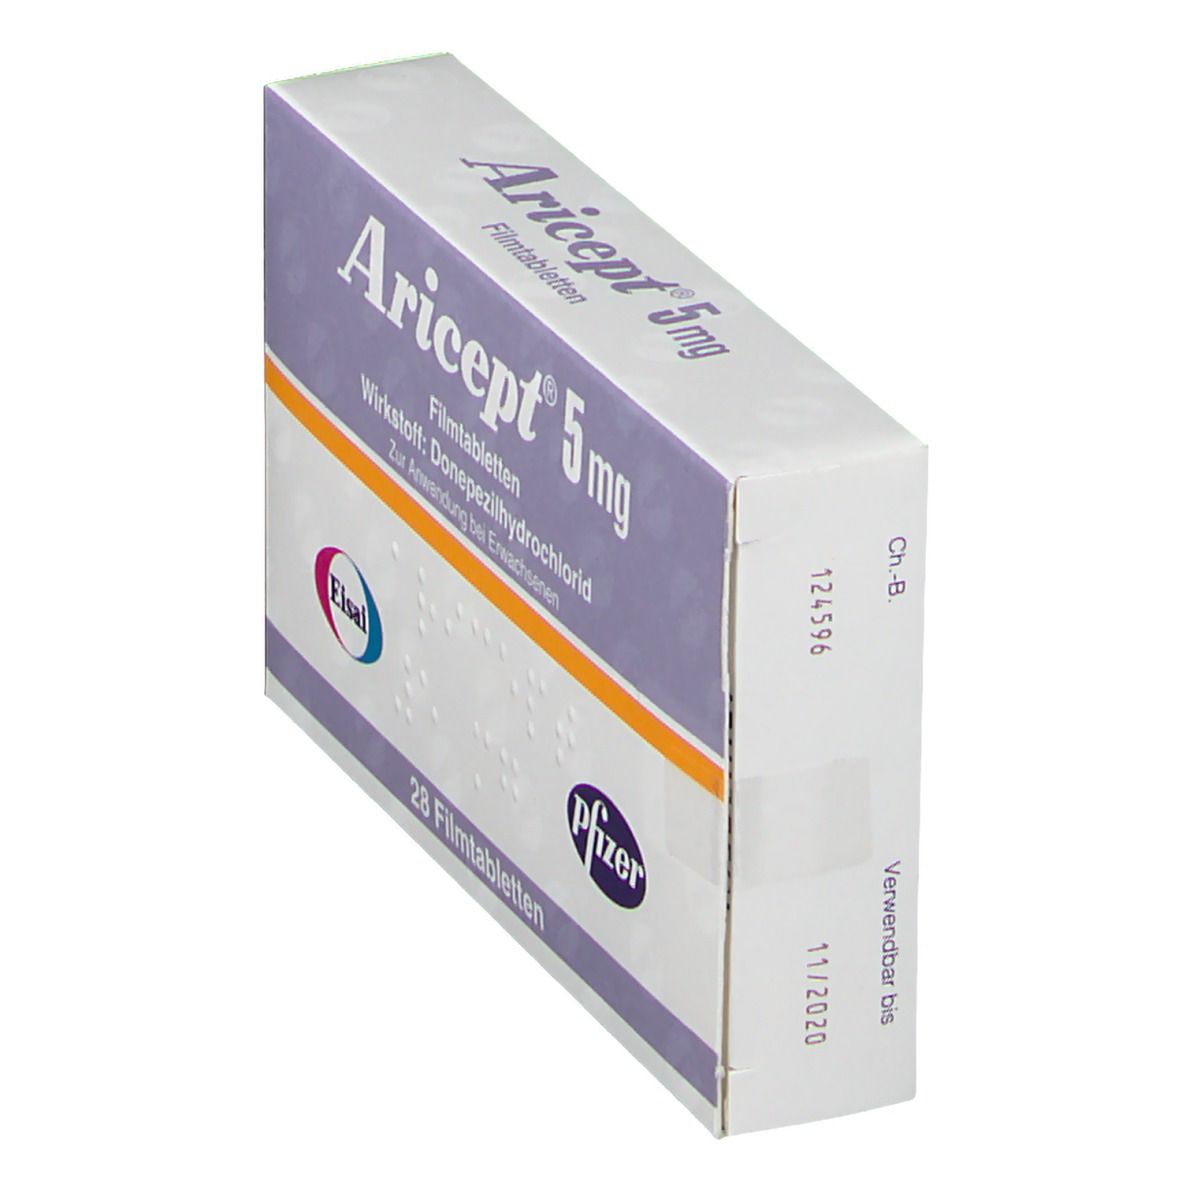 Aricept® 5 mg